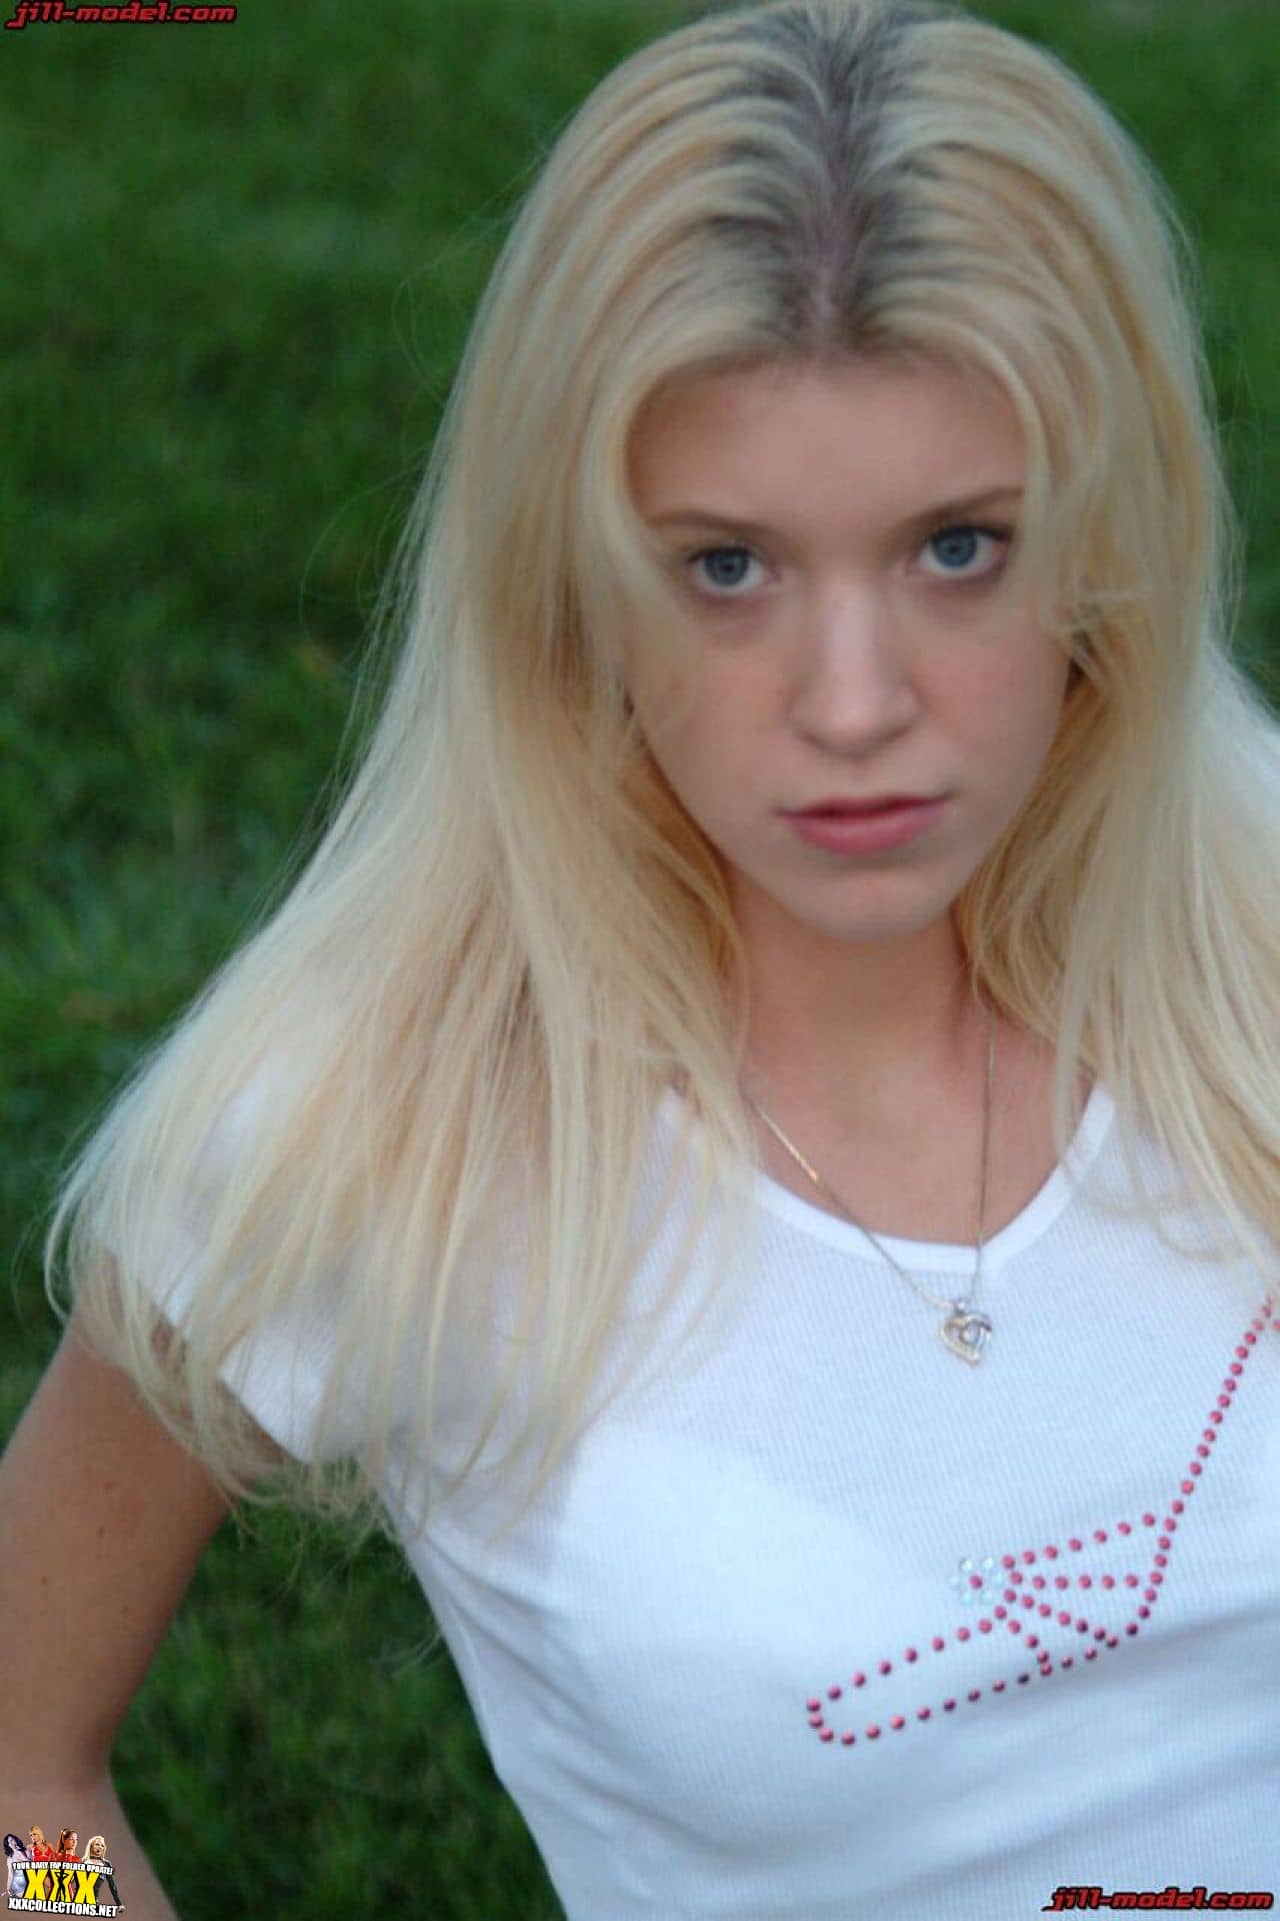 Jill Model Cute Teen Model Picture Sets Siterip Download